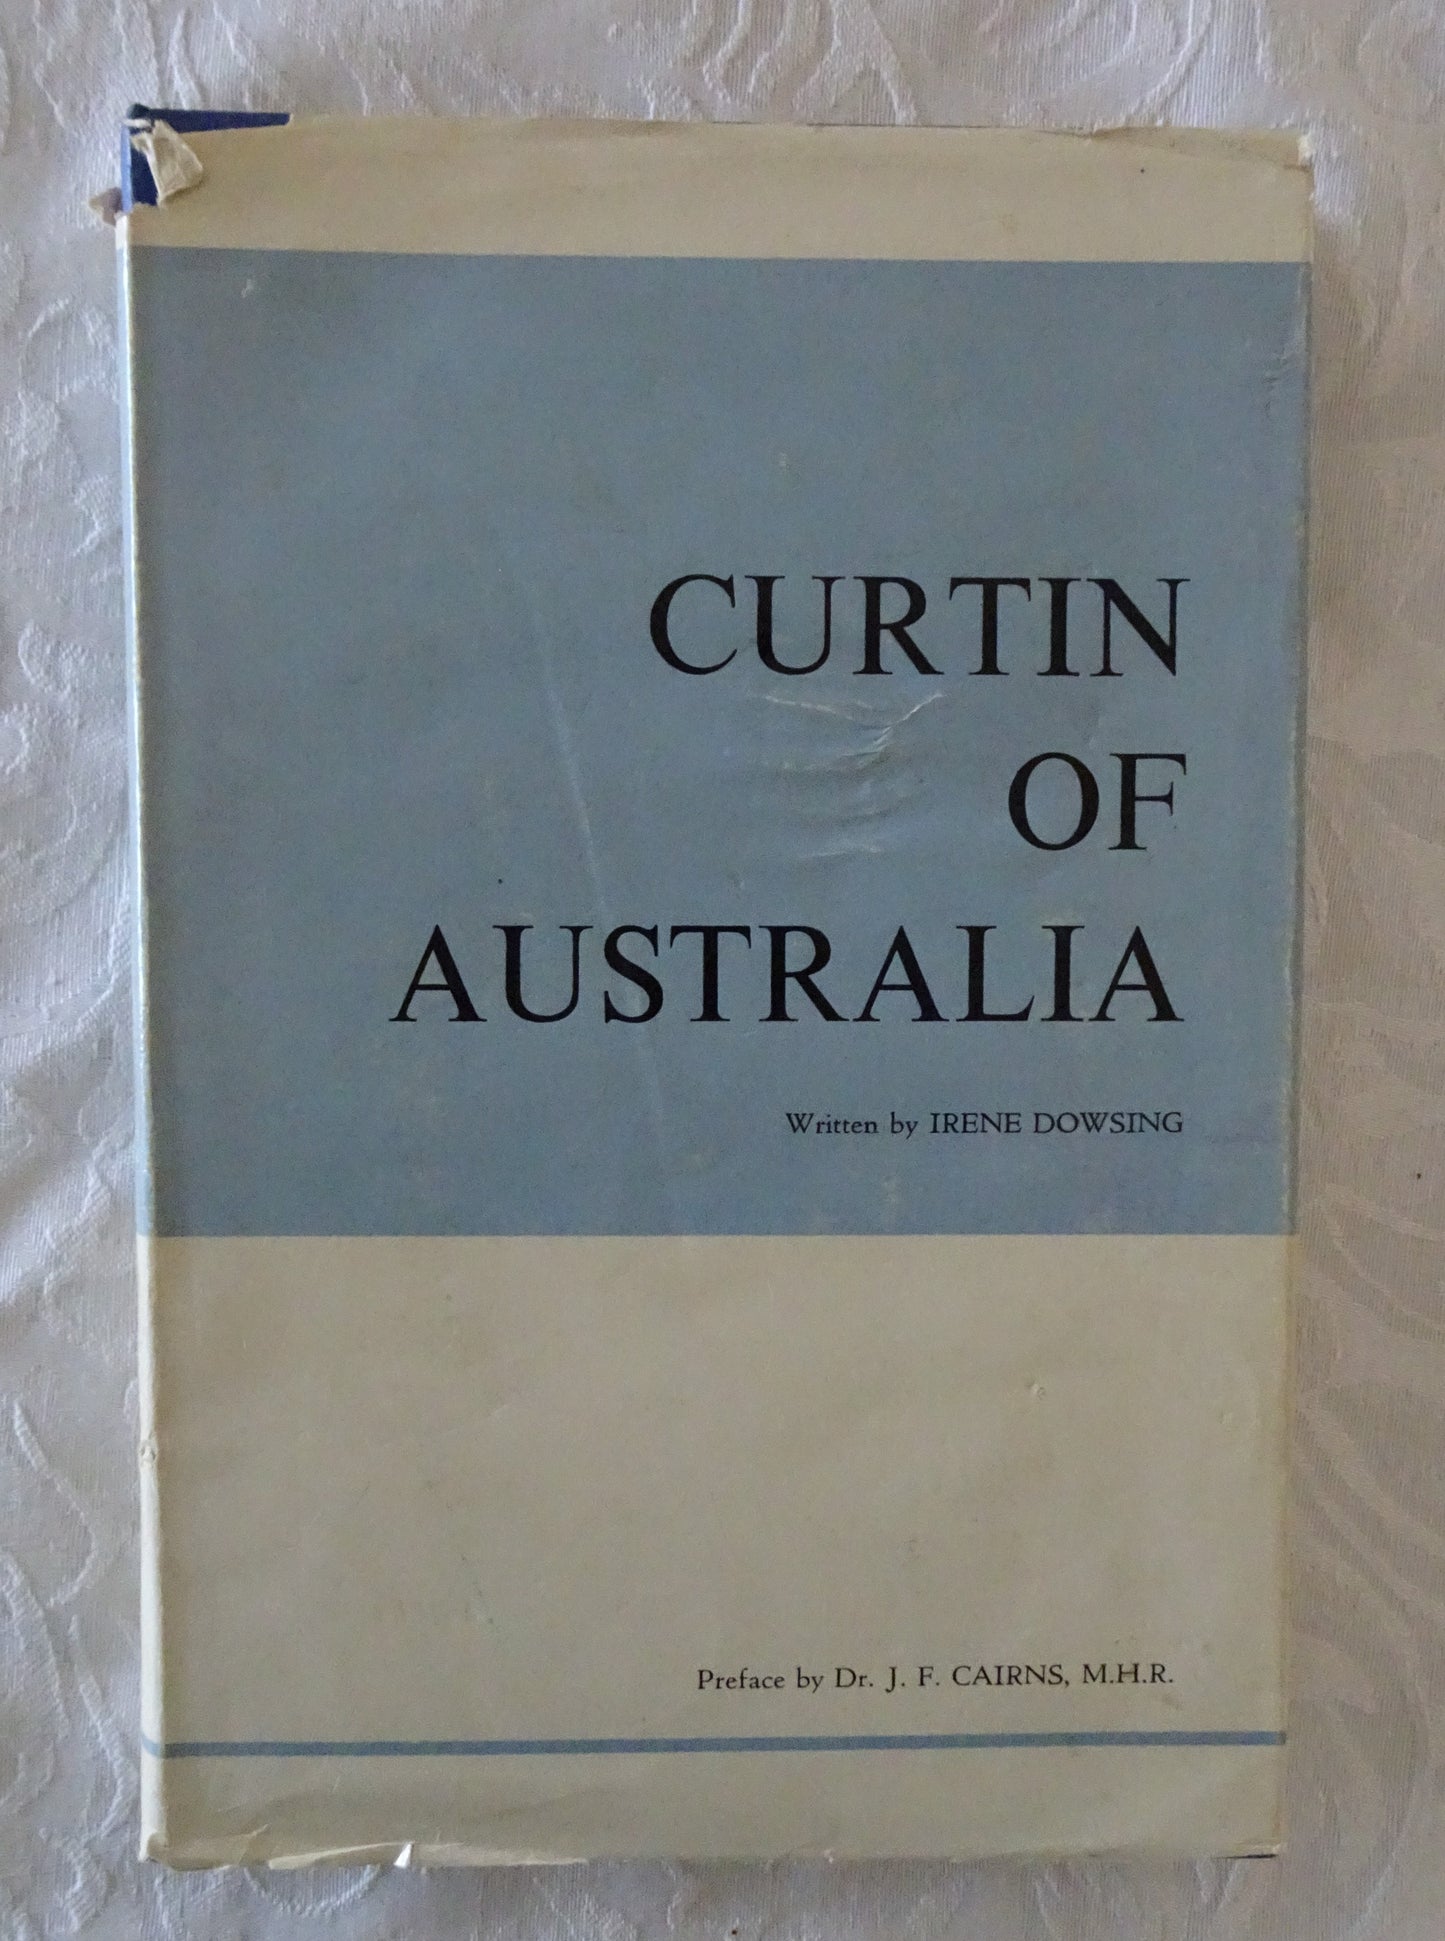 Curtin of Australia by Irene Dowsing